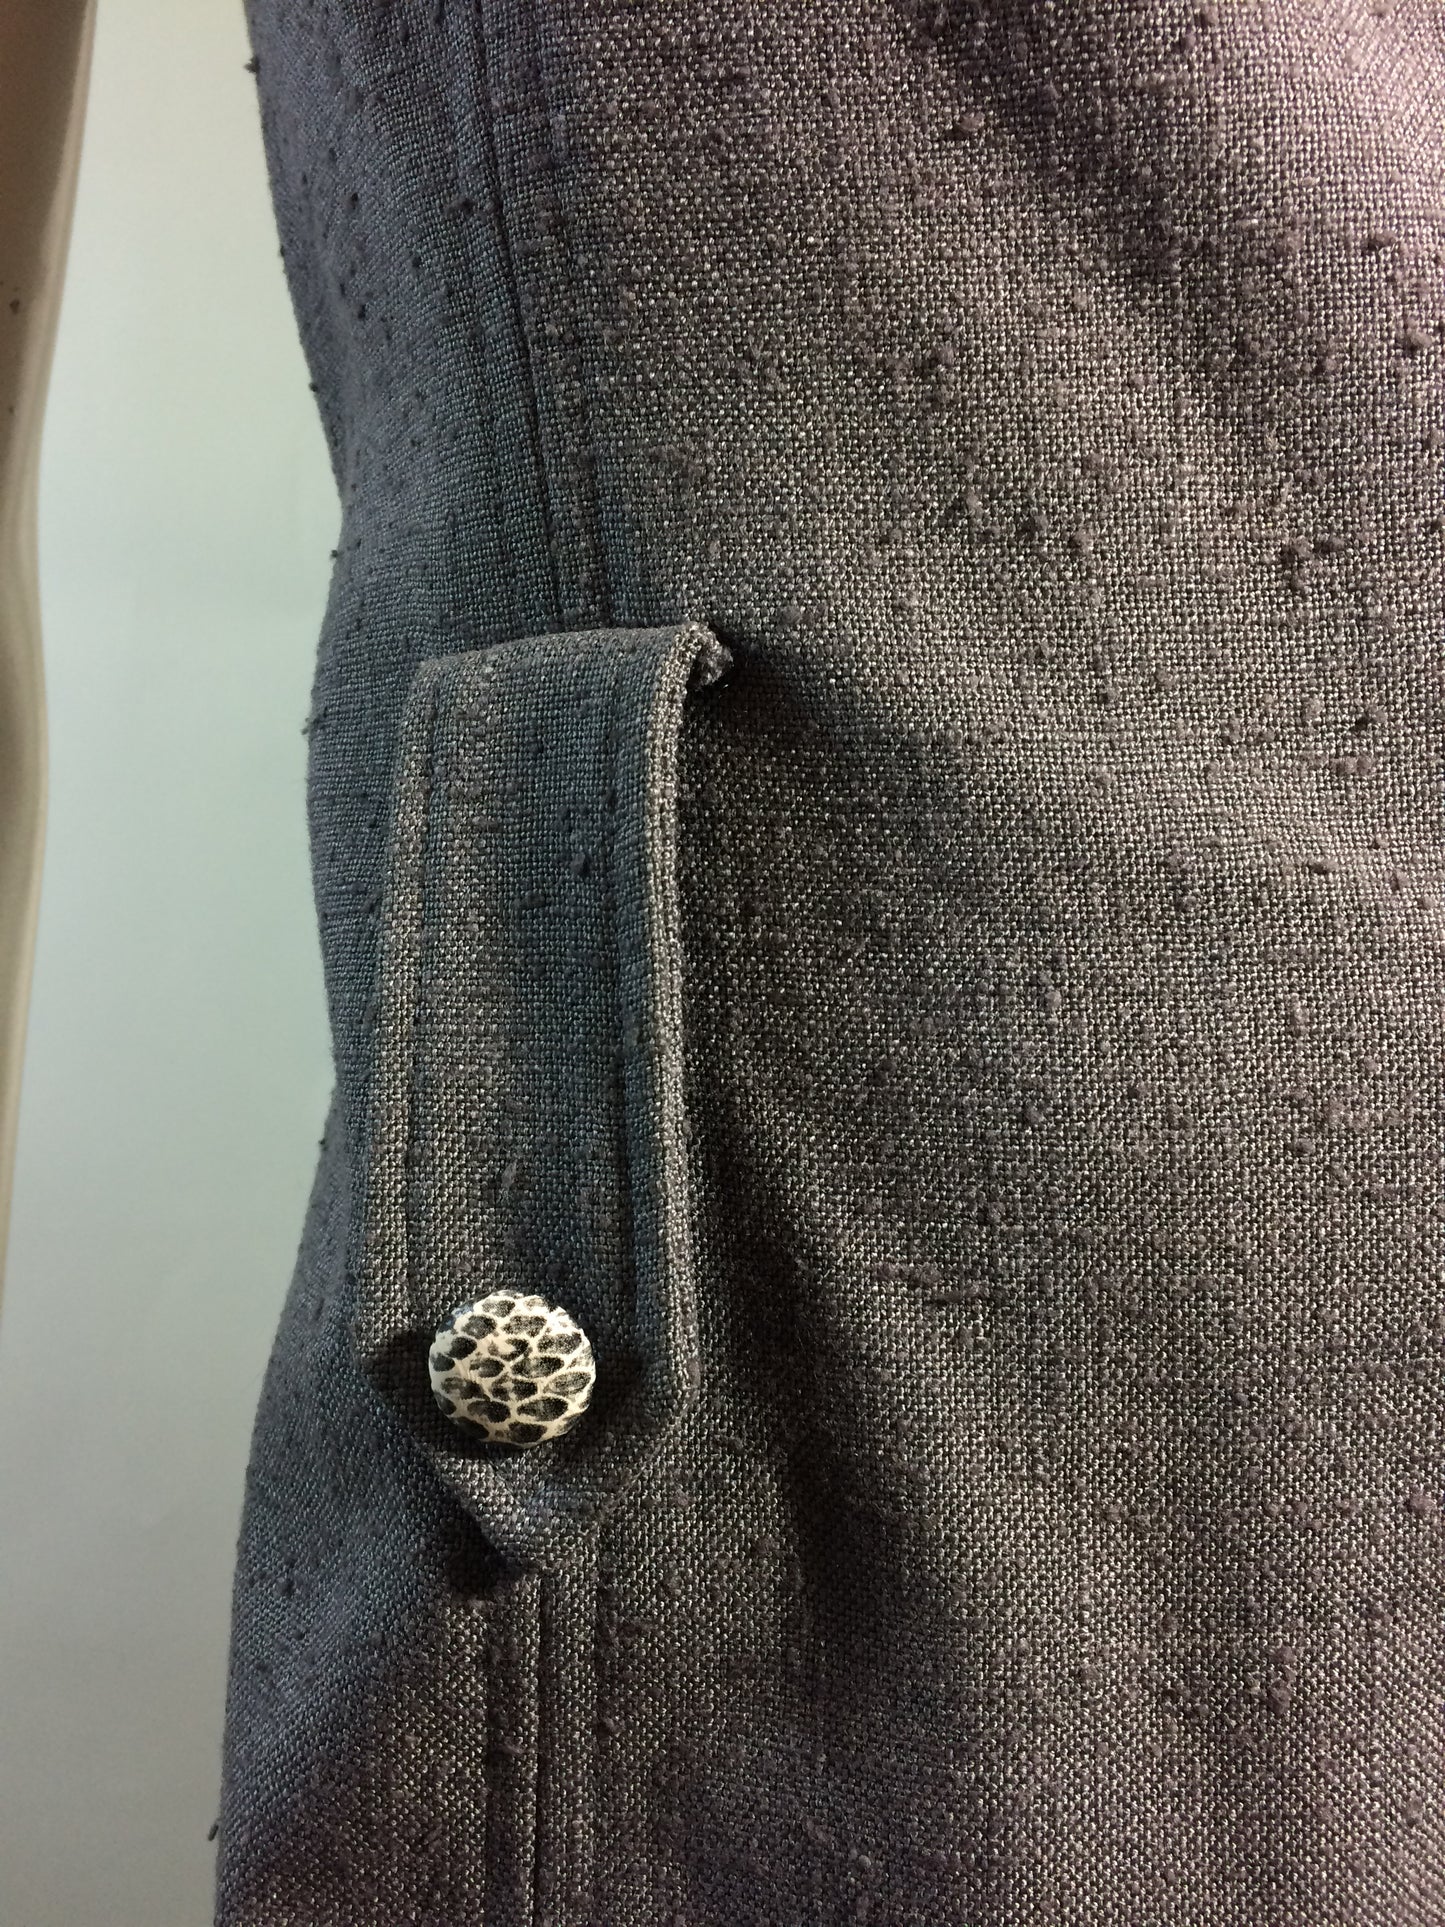 Charcoal Grey Linen Weave Rayon Sheath Dress w/ Faux Snakeskin Accents circa 1960s